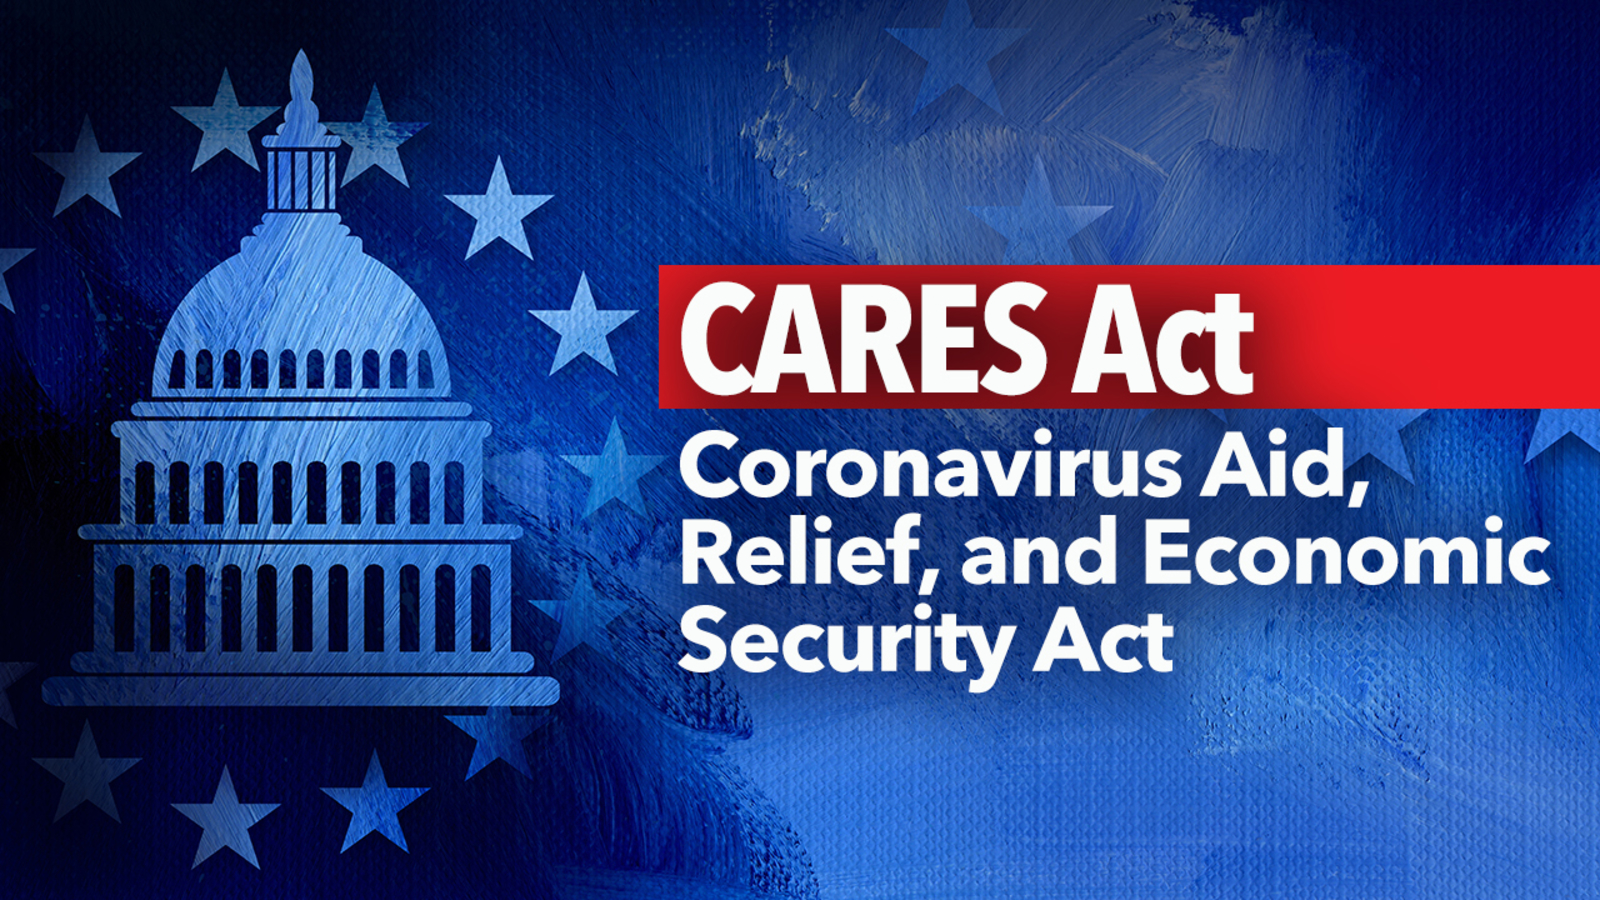 Economic Resiliency Grant Initiative “CARES Act”